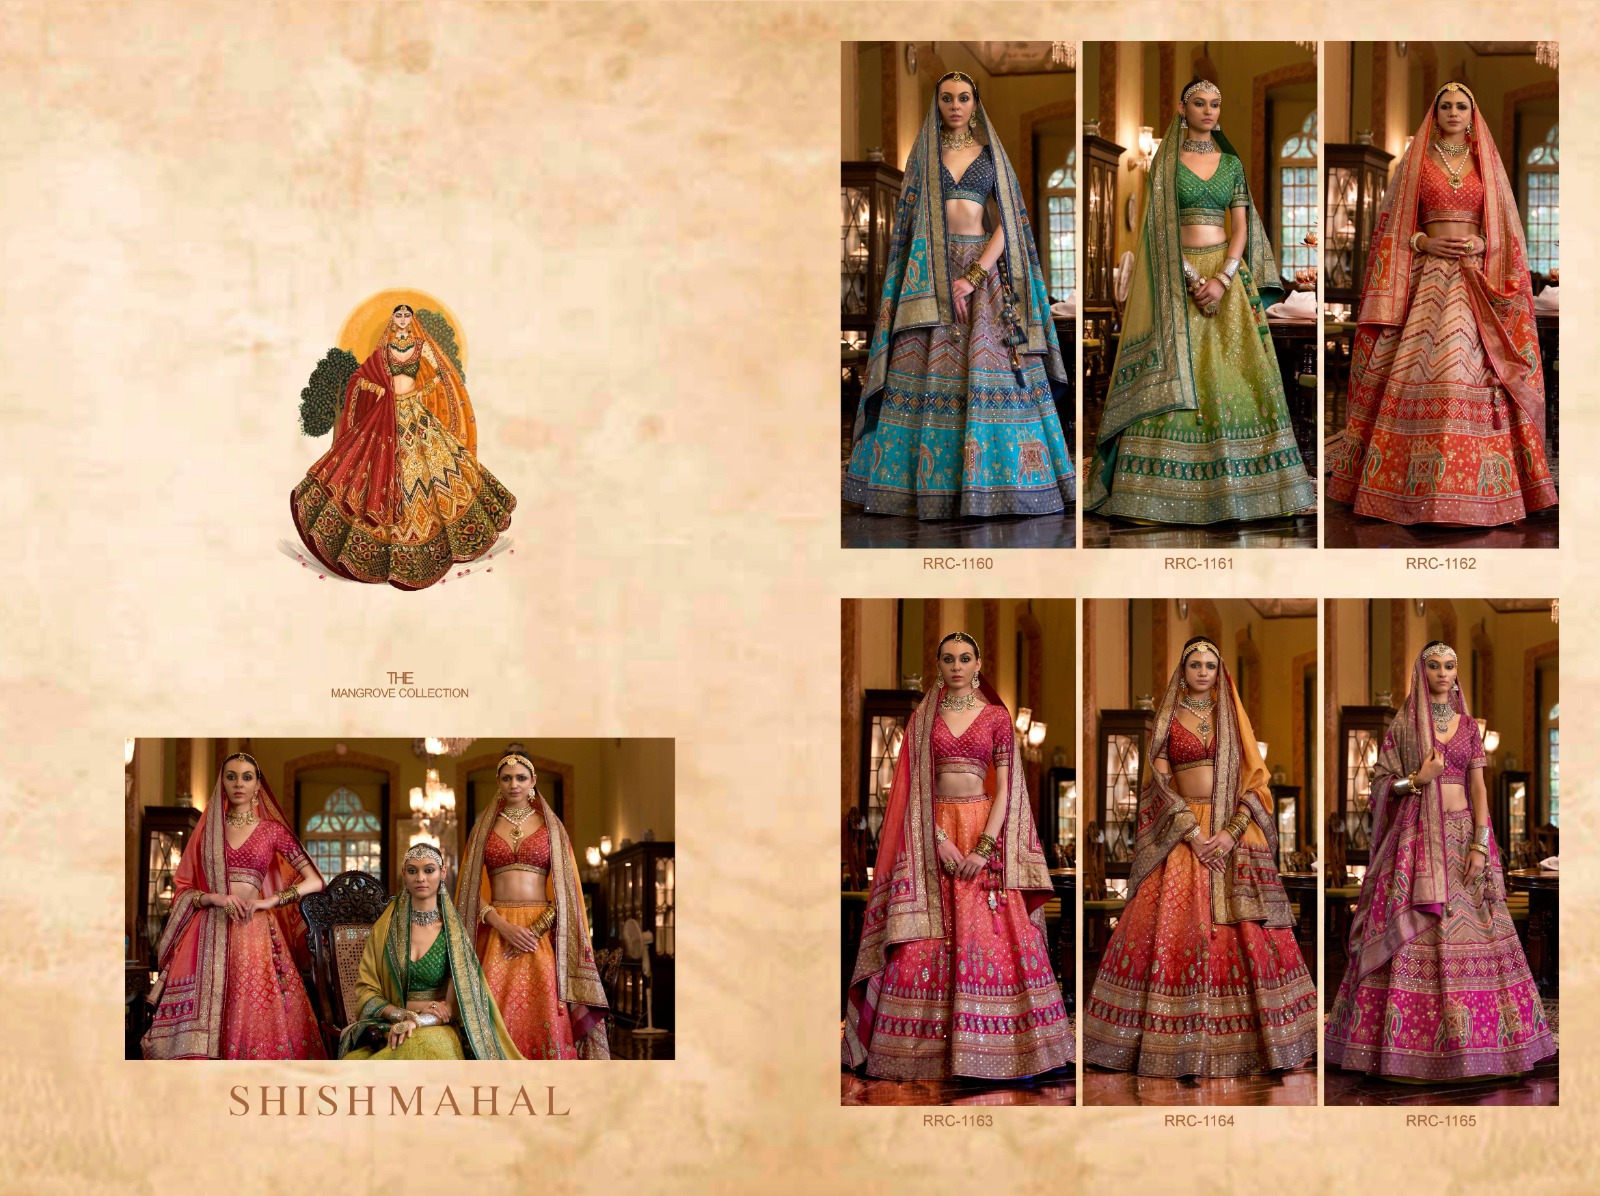 Rewaa Shishmahal collection 4